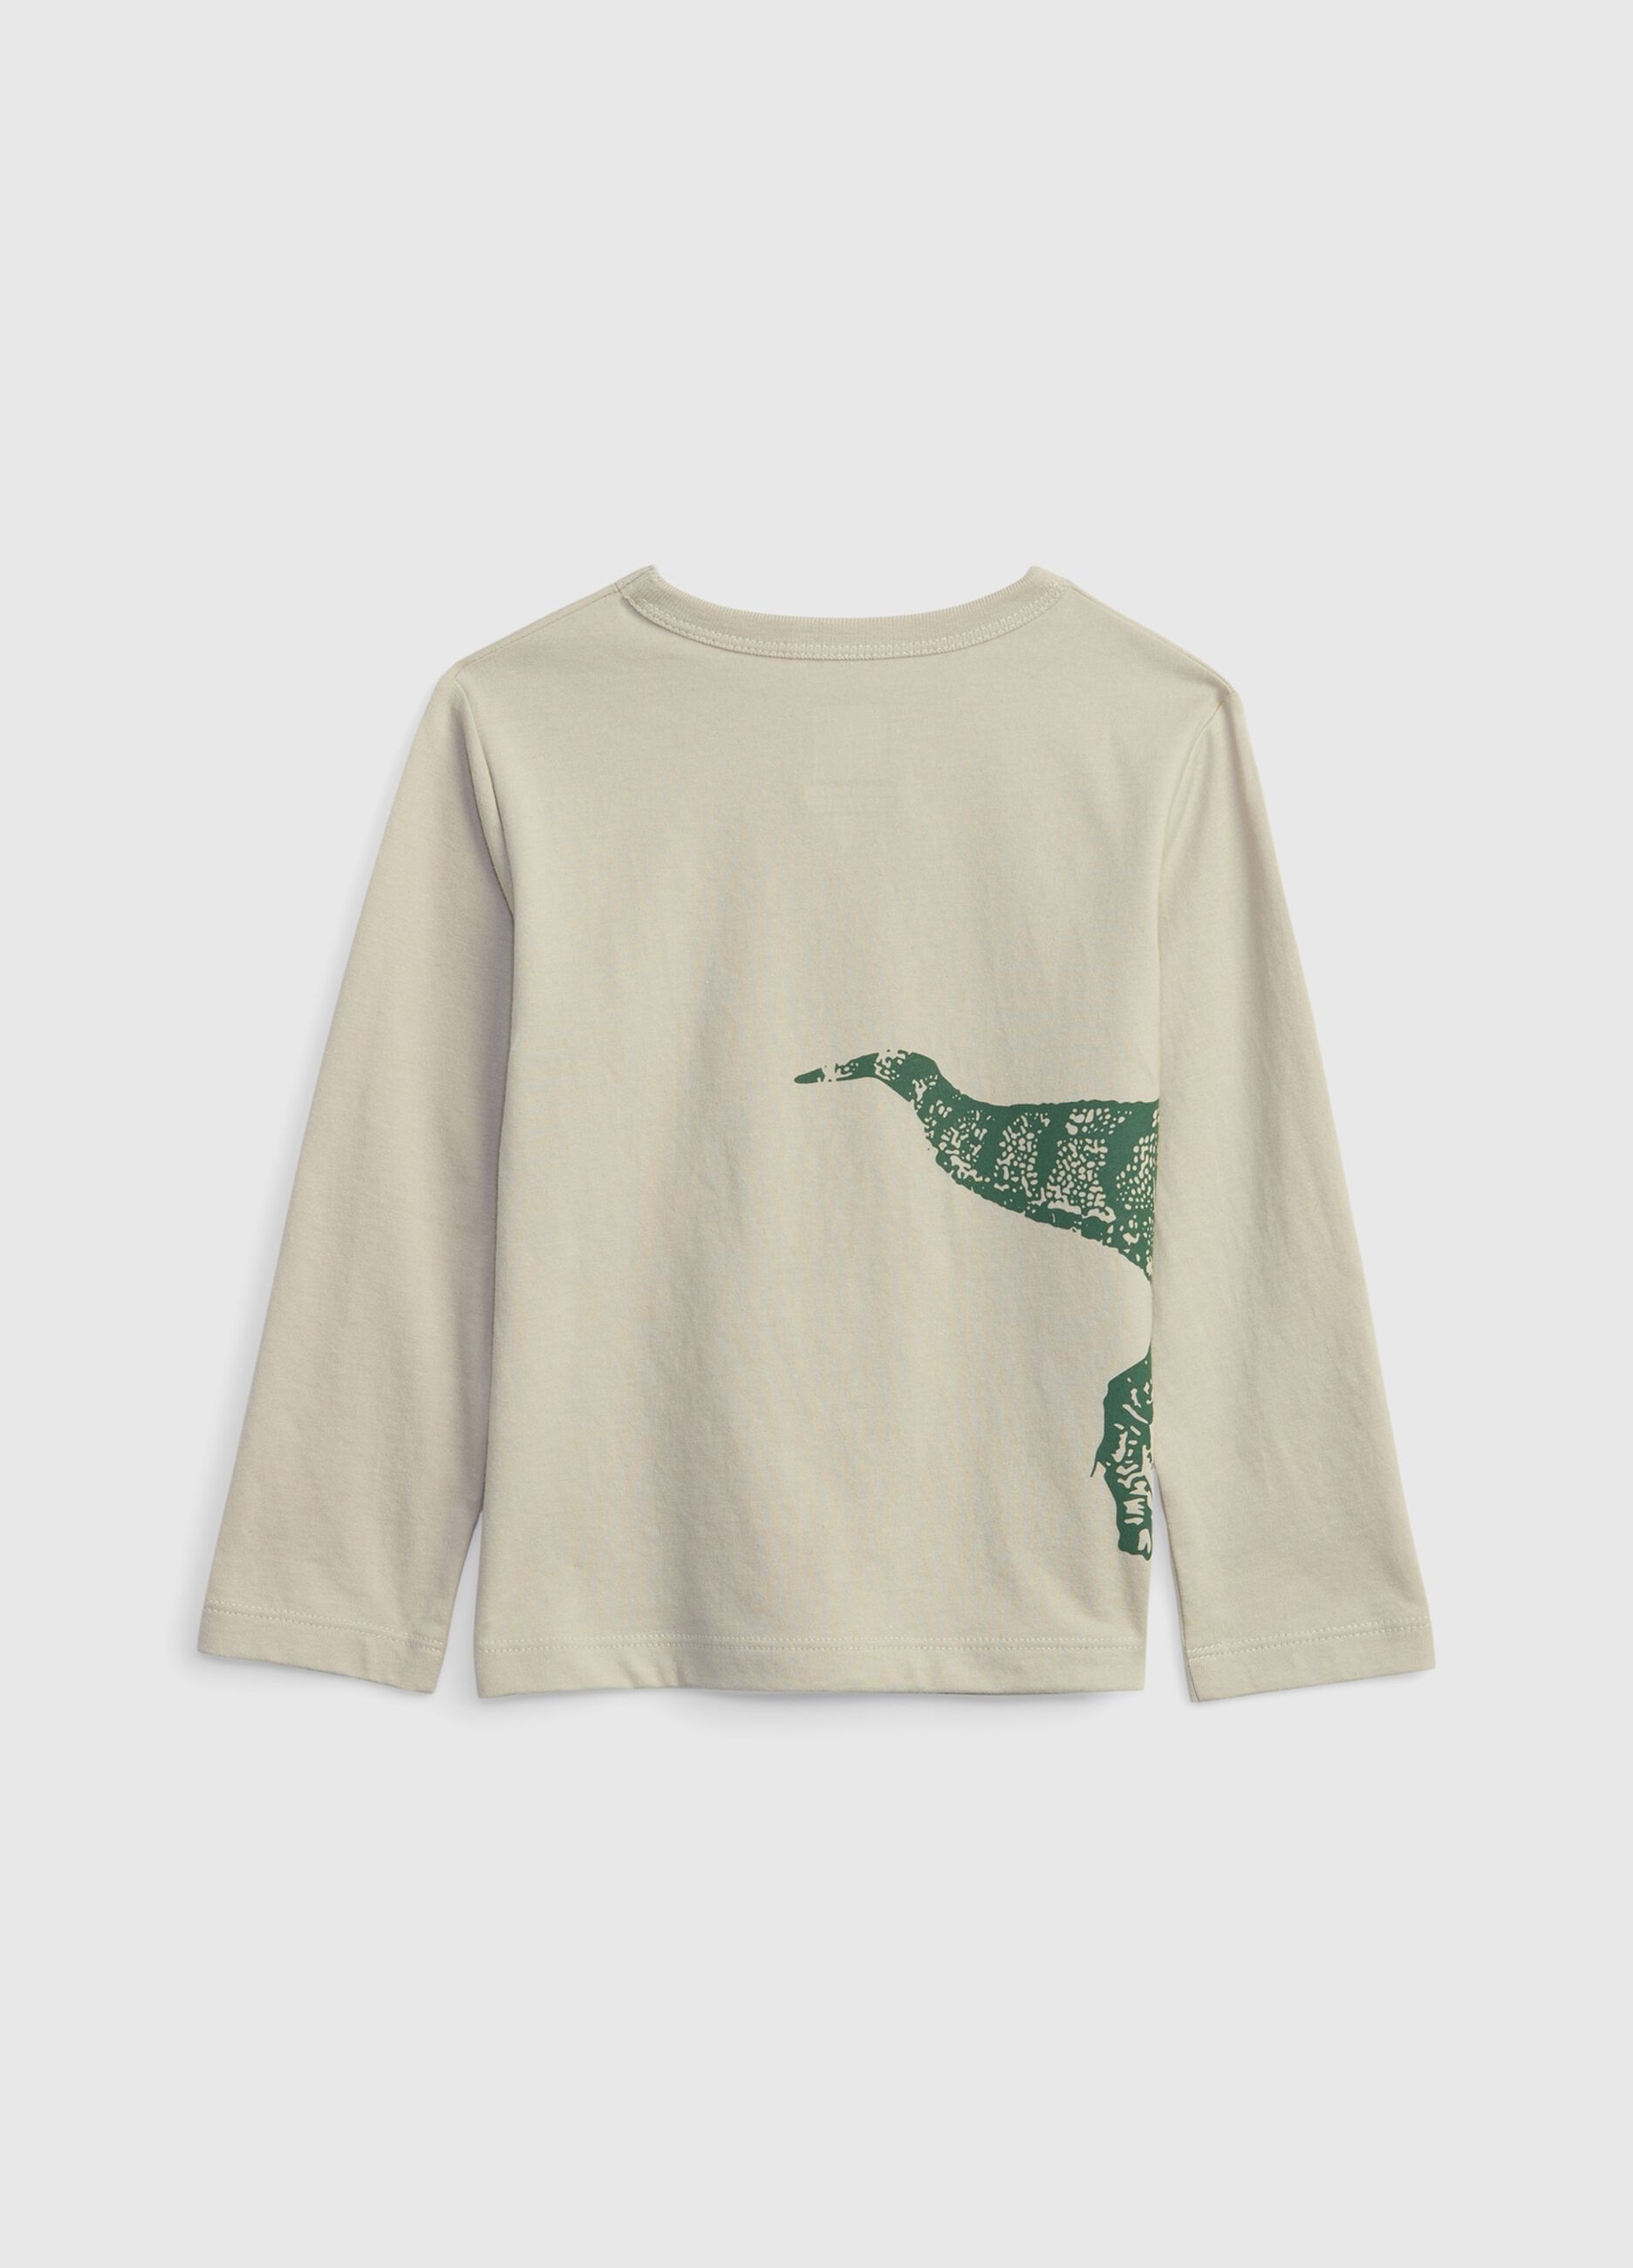 T-shirt with dinosaur print